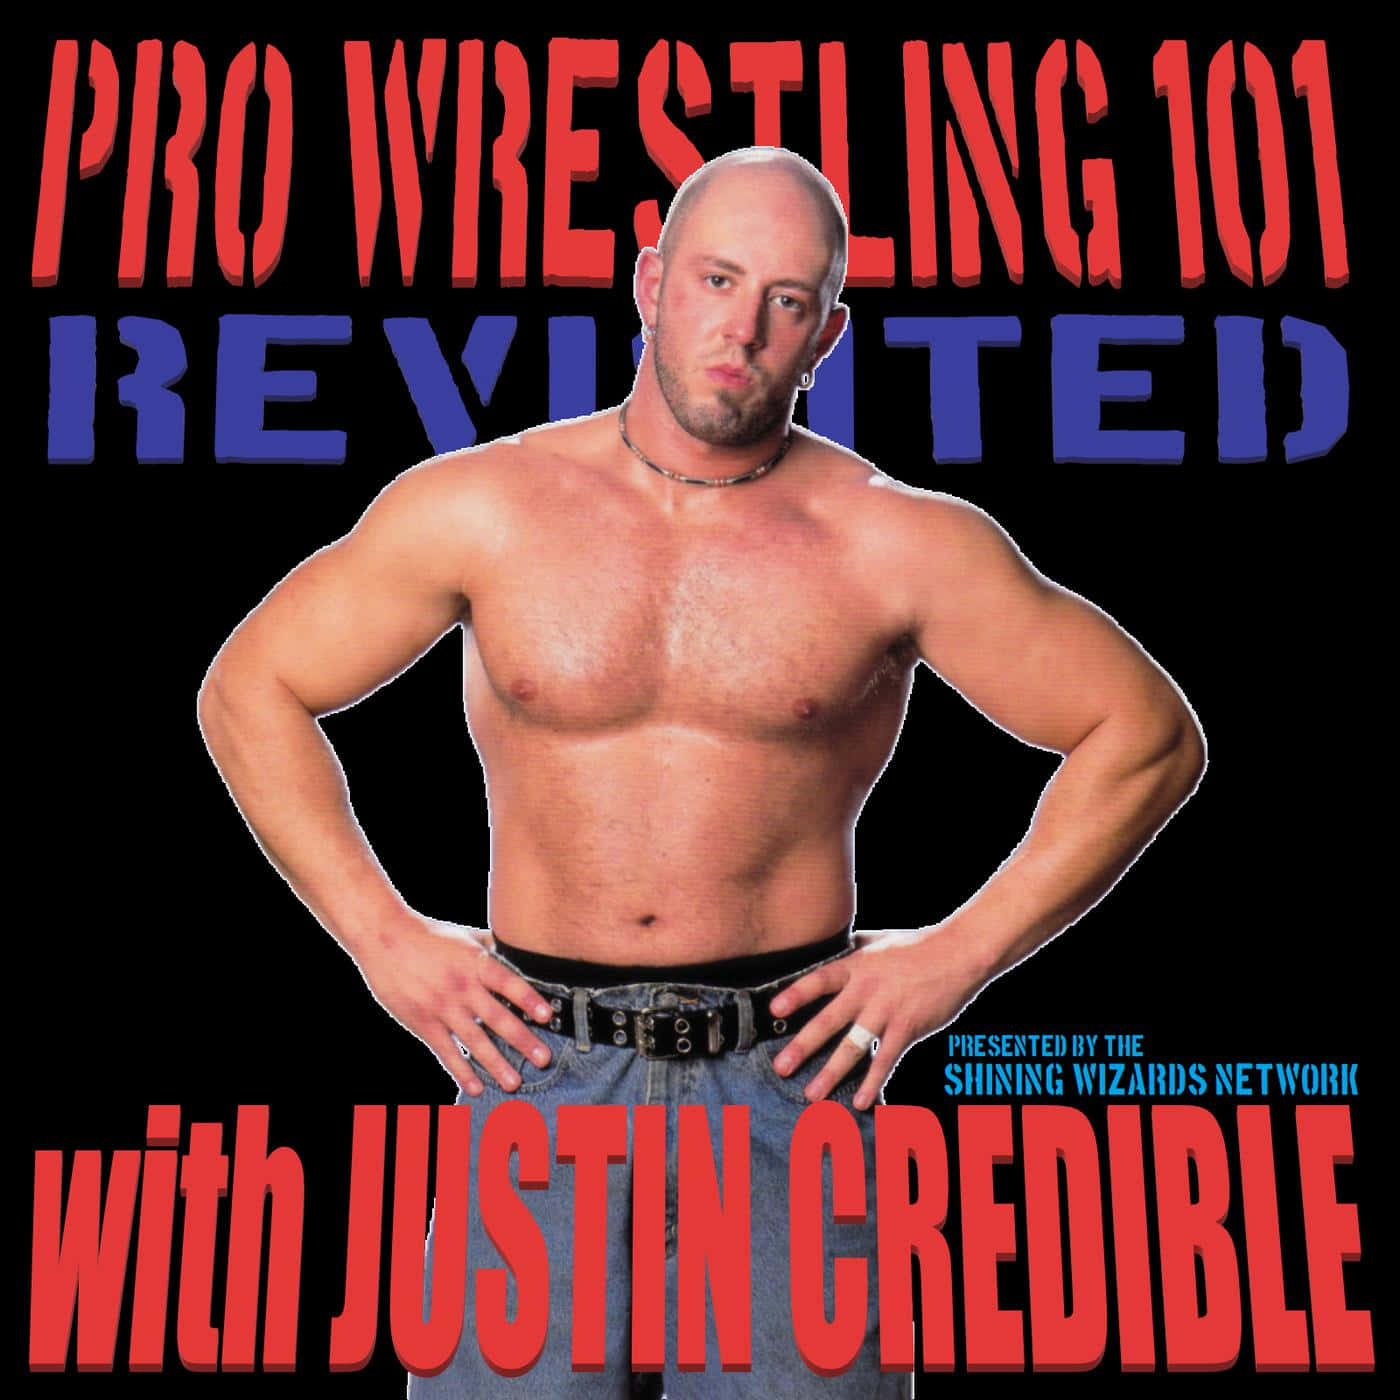 Justin Credible Profesionel Wrestler Wallpaper